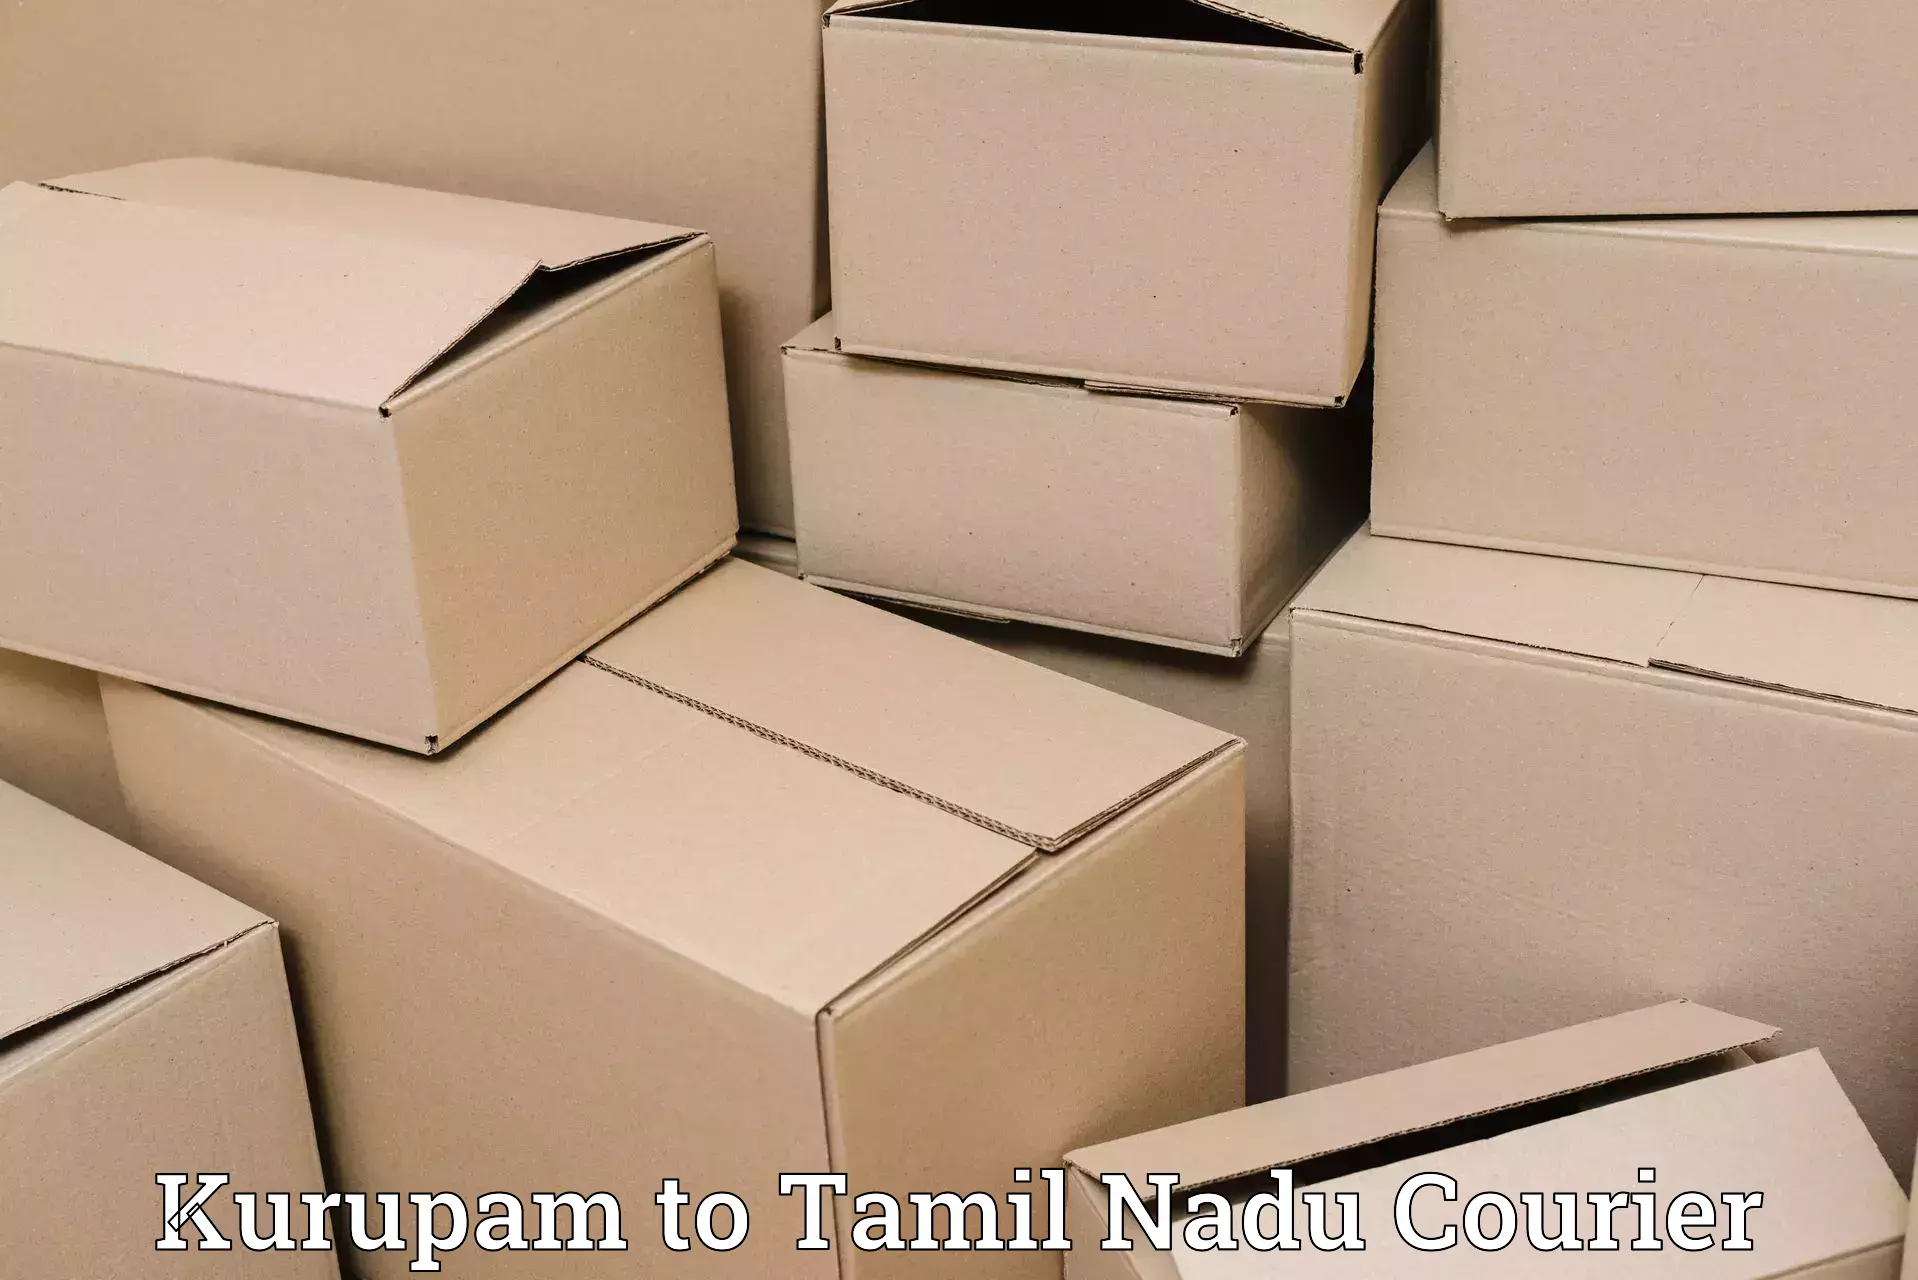 Cash on delivery service Kurupam to Melmaruvathur